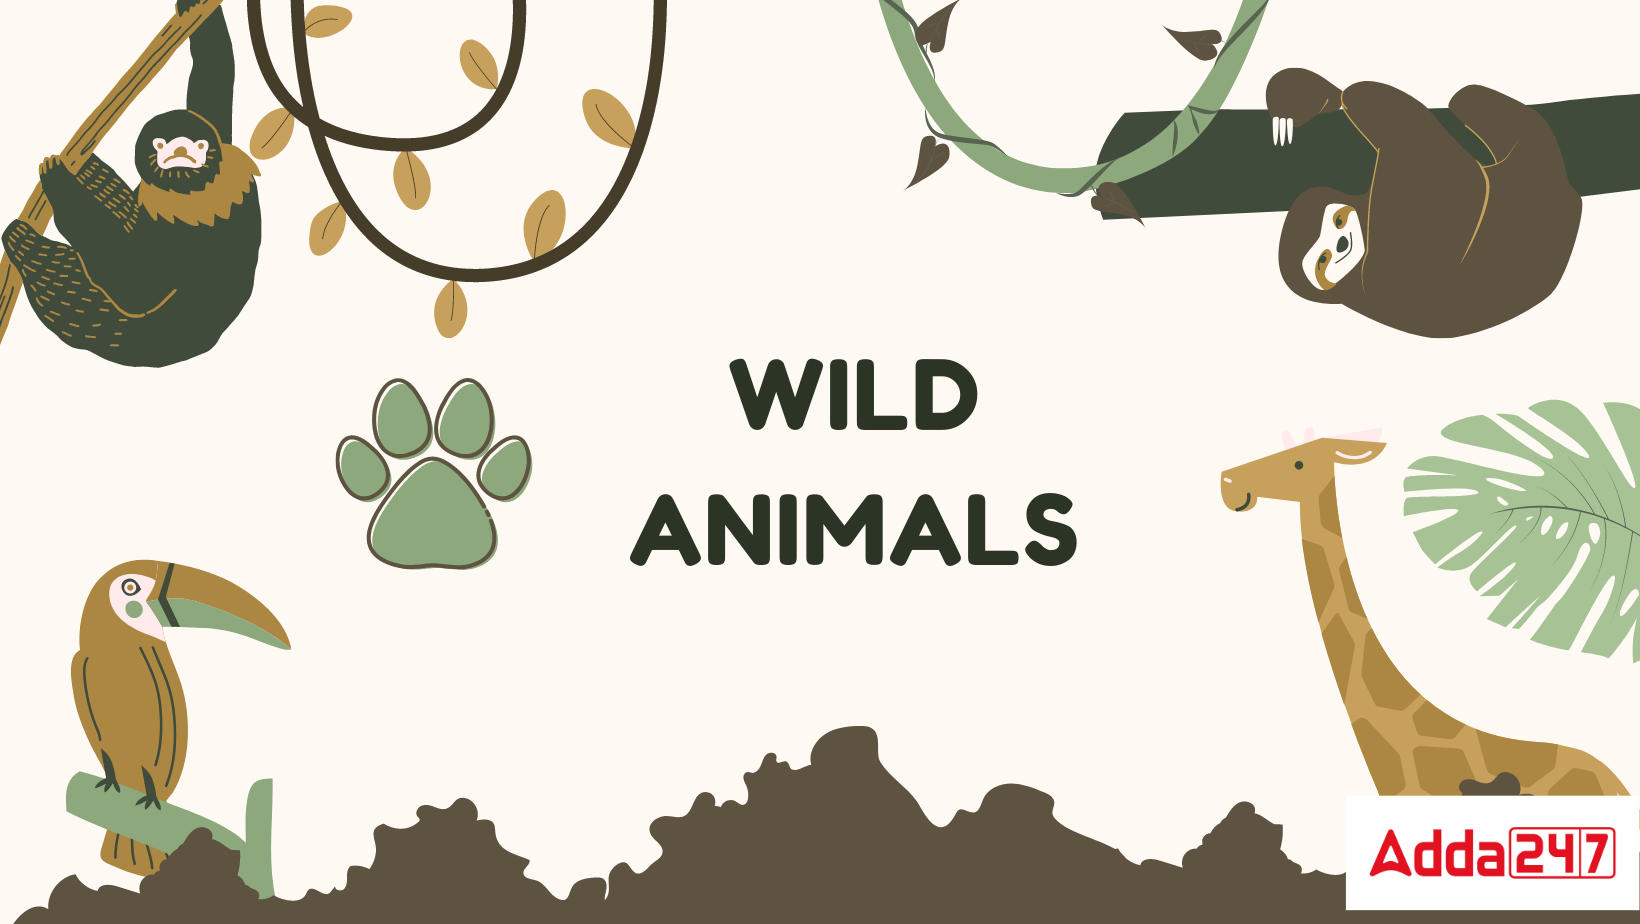 Wild Animals Name (100) in English and Hindi